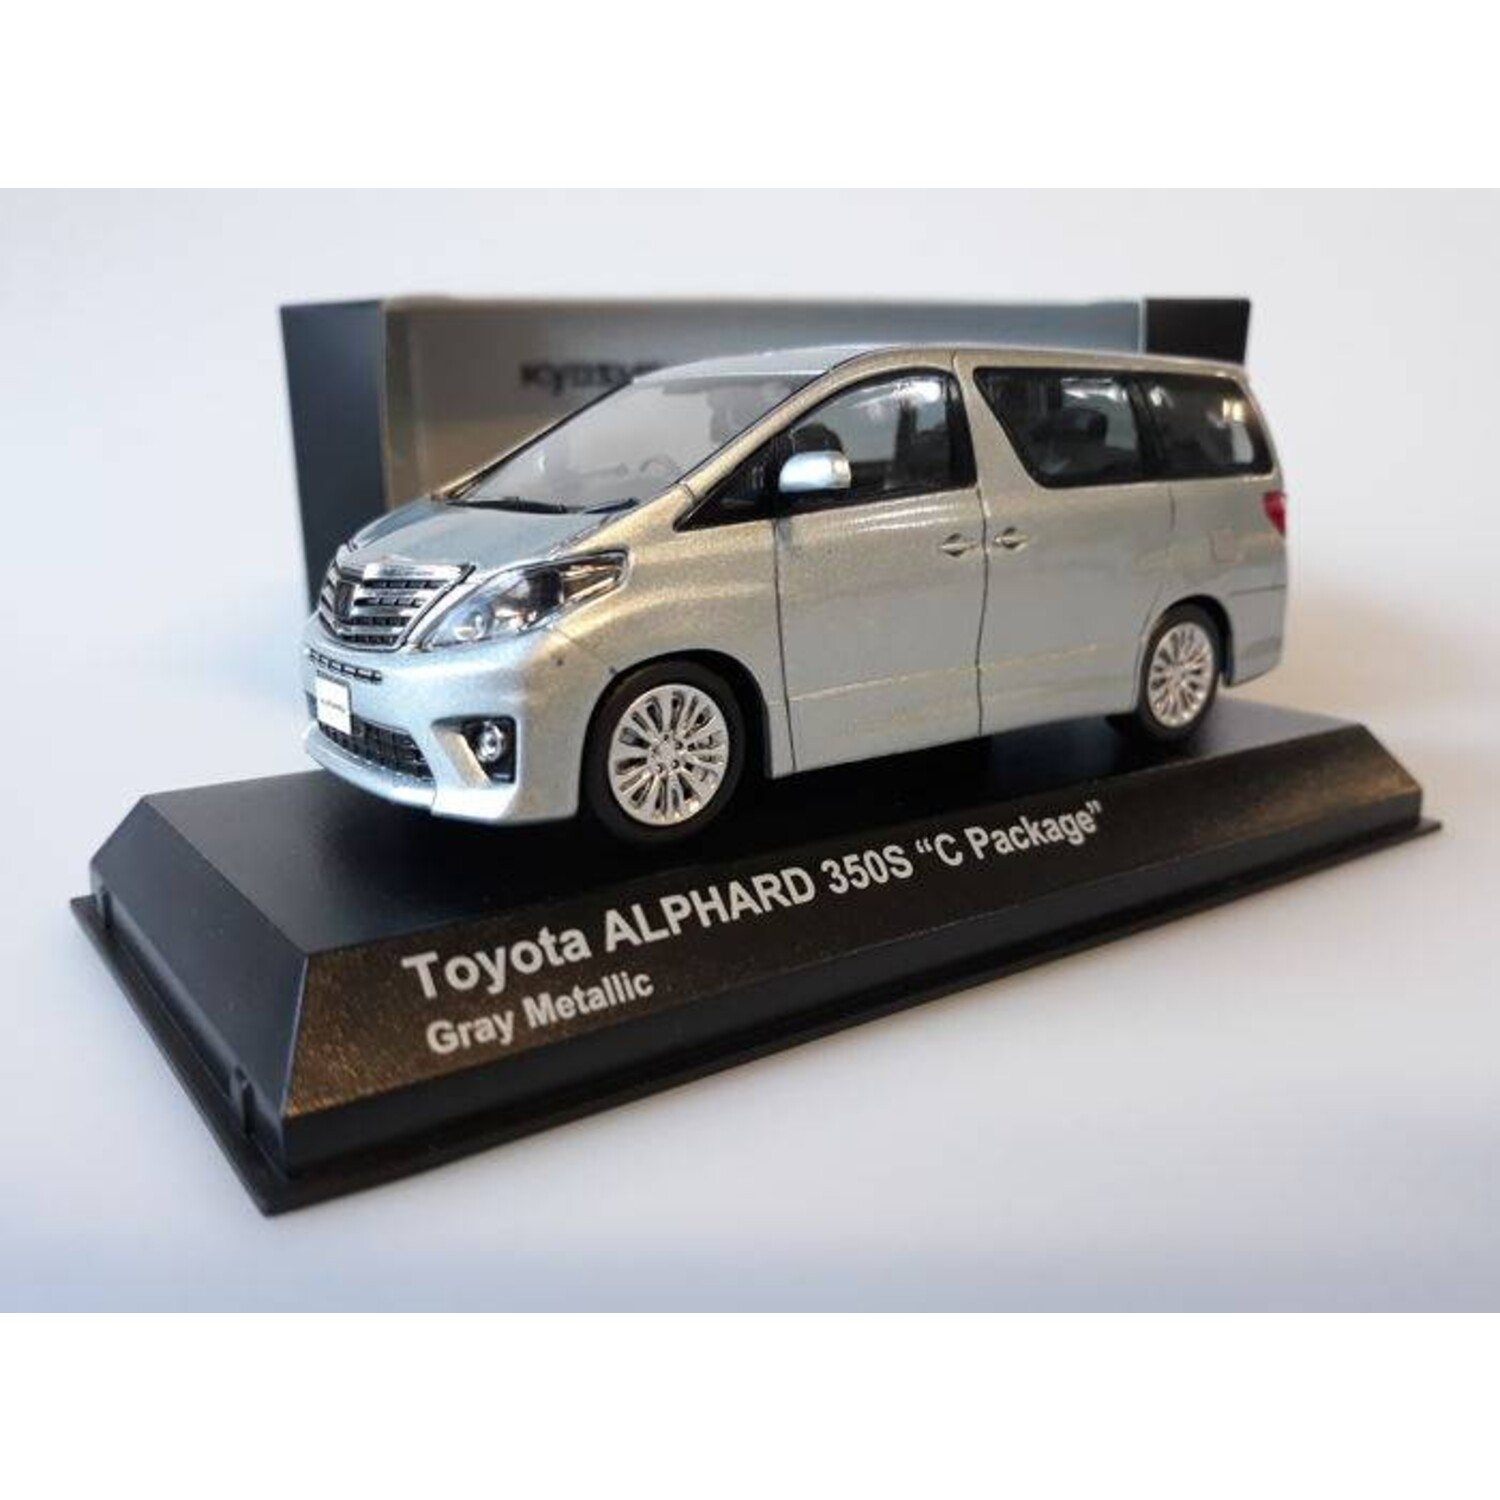 Toyota Toyota Alphard 350S 'C Package' - 1:43 - Kyosho